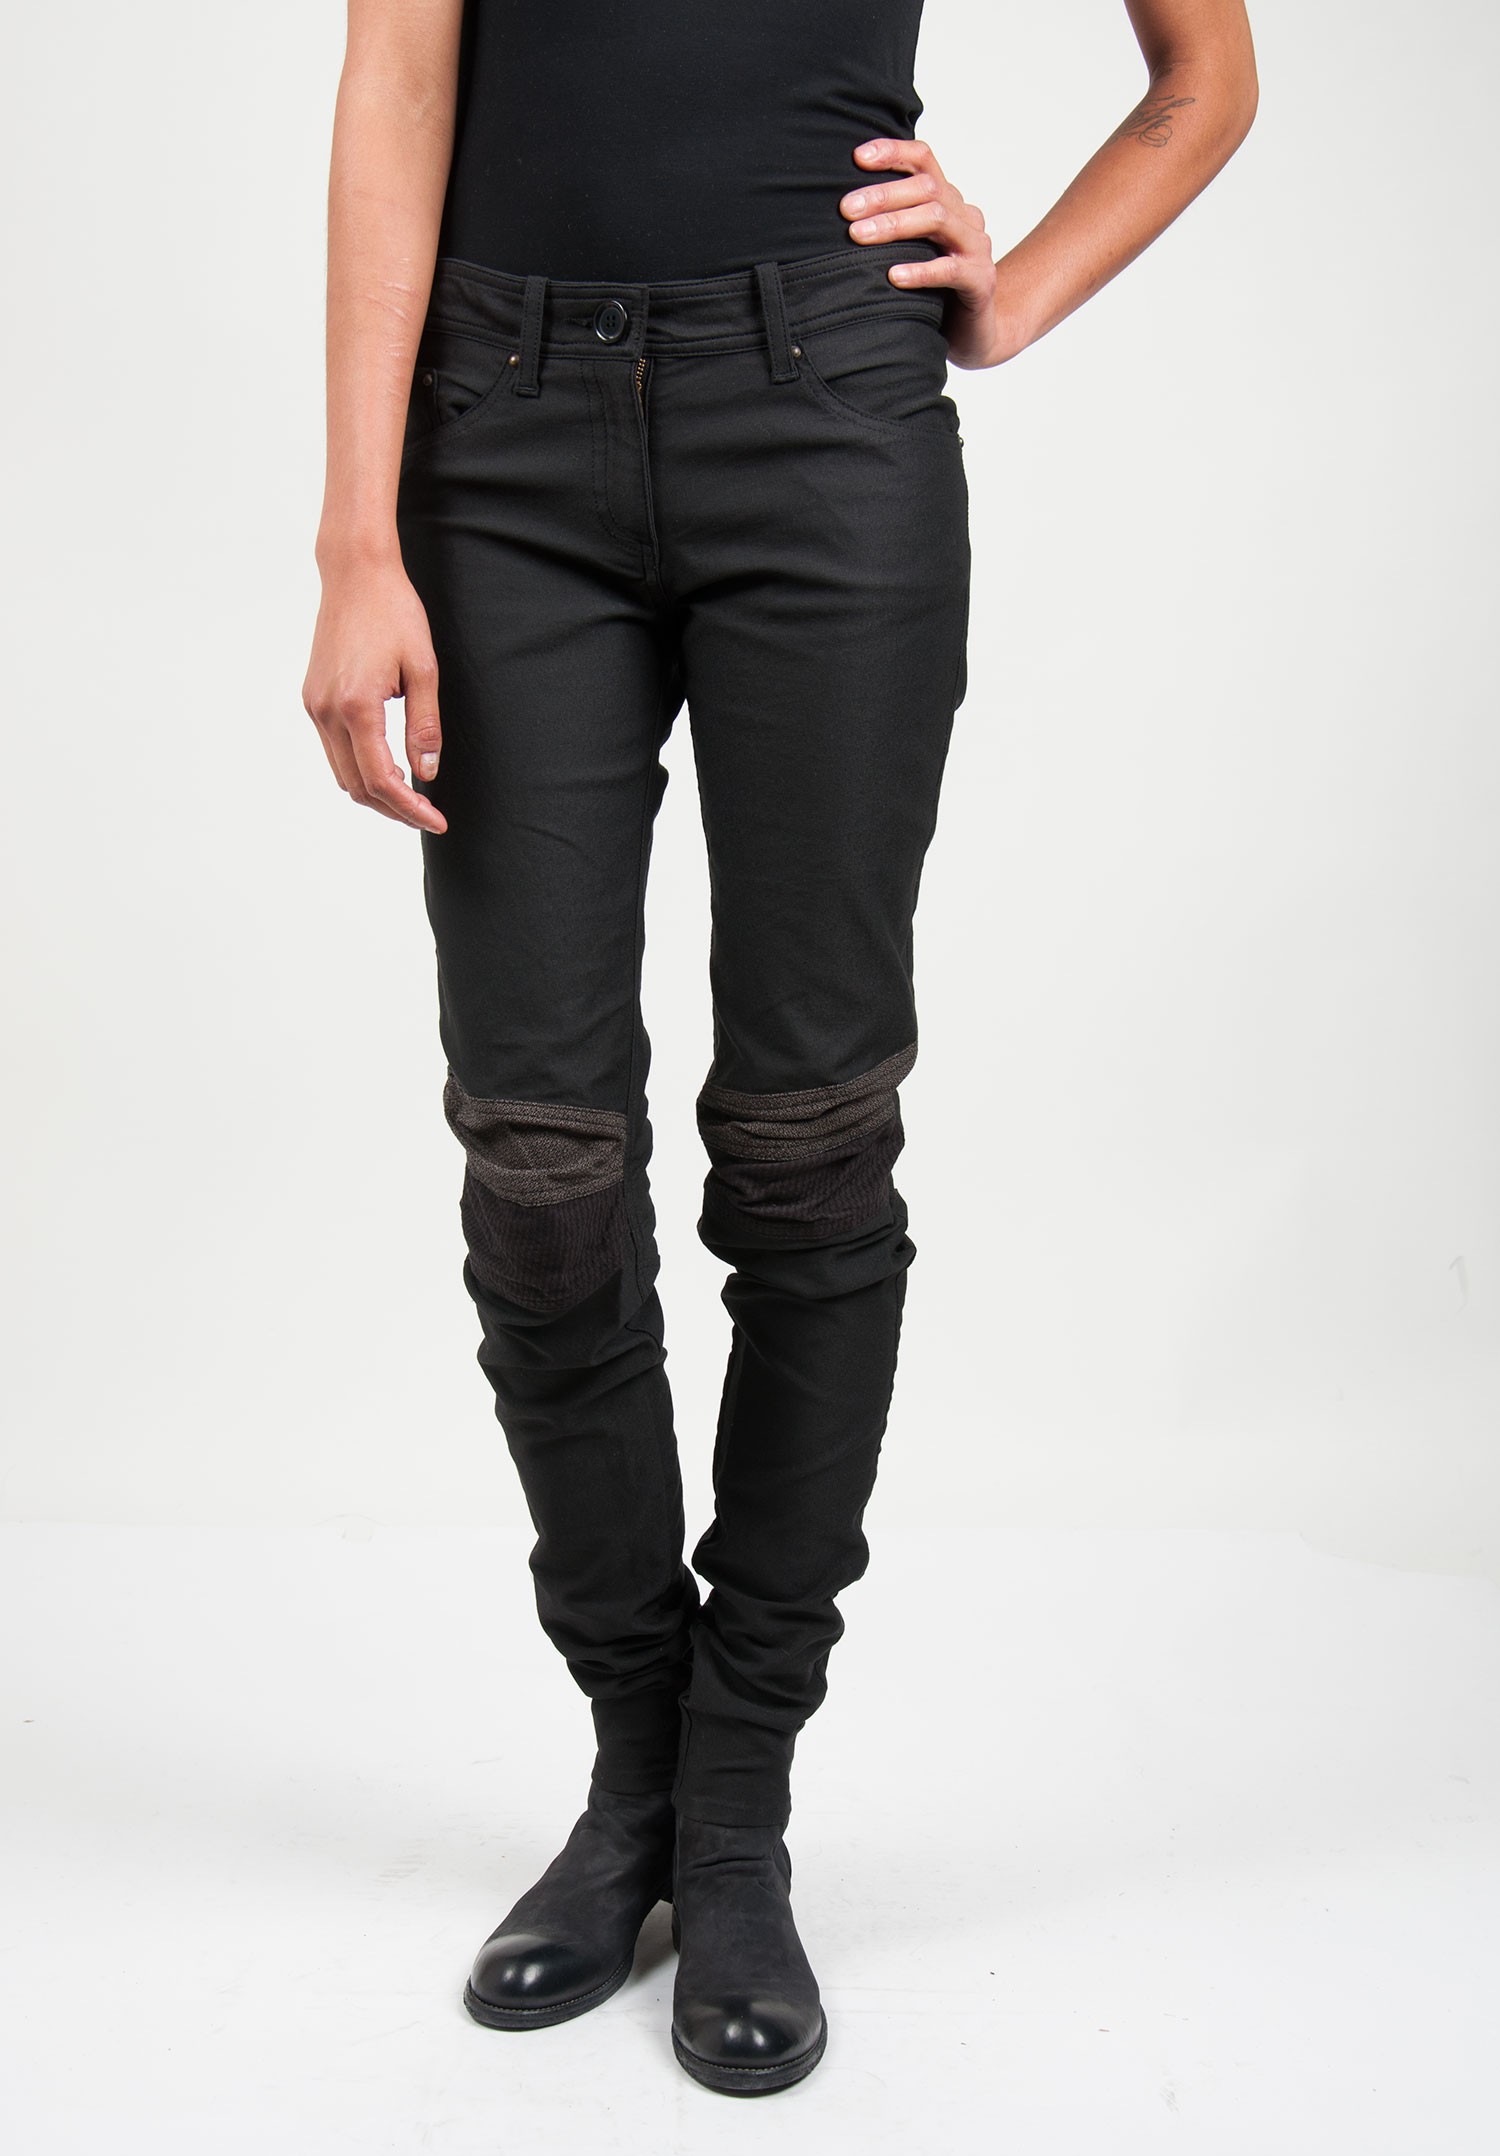 Share Spirit Patchwork Skinny Jeans in Black | Santa Fe Dry Goods ...